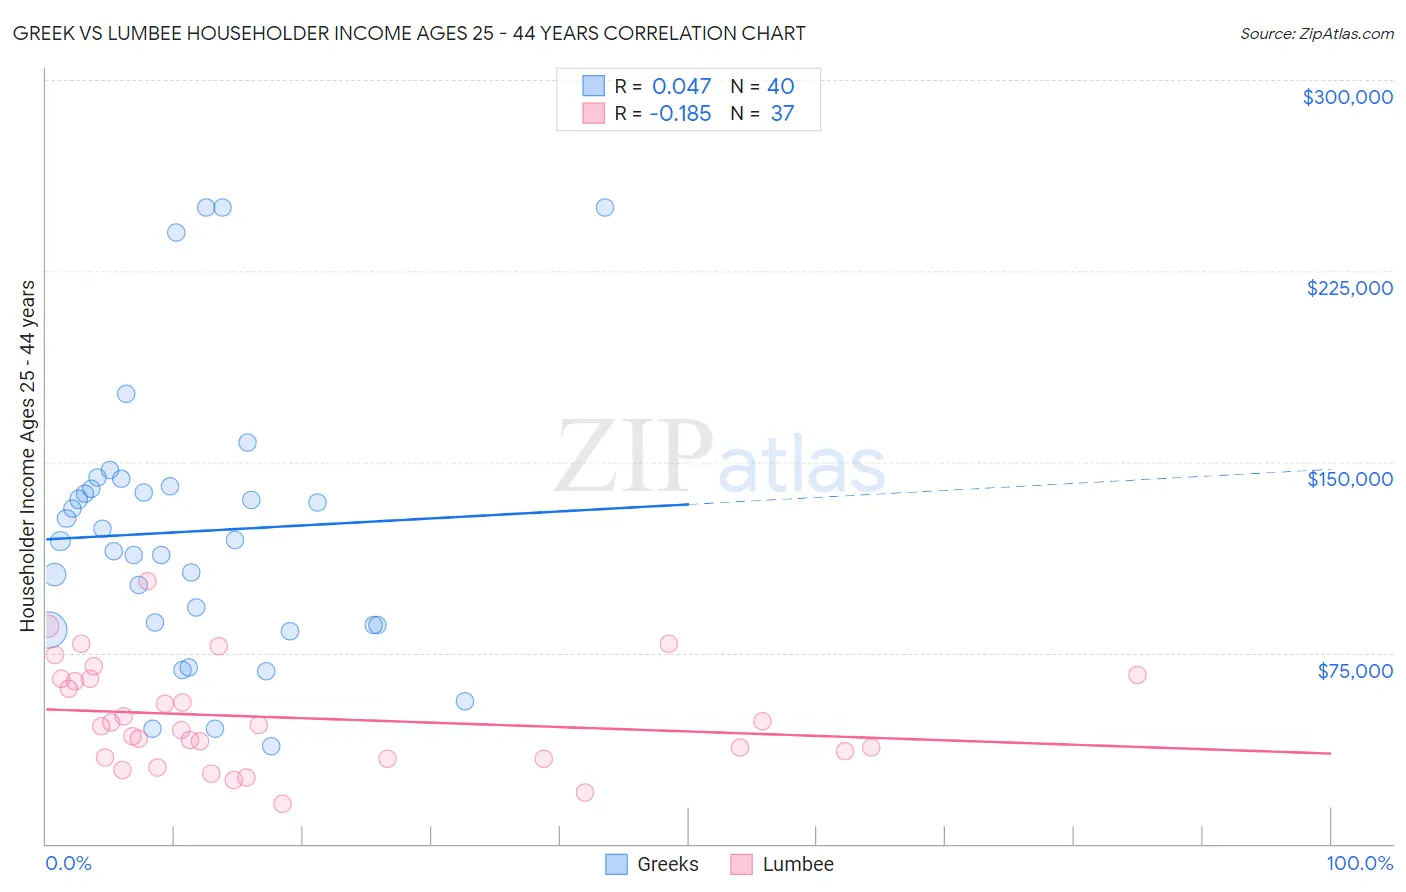 Greek vs Lumbee Householder Income Ages 25 - 44 years